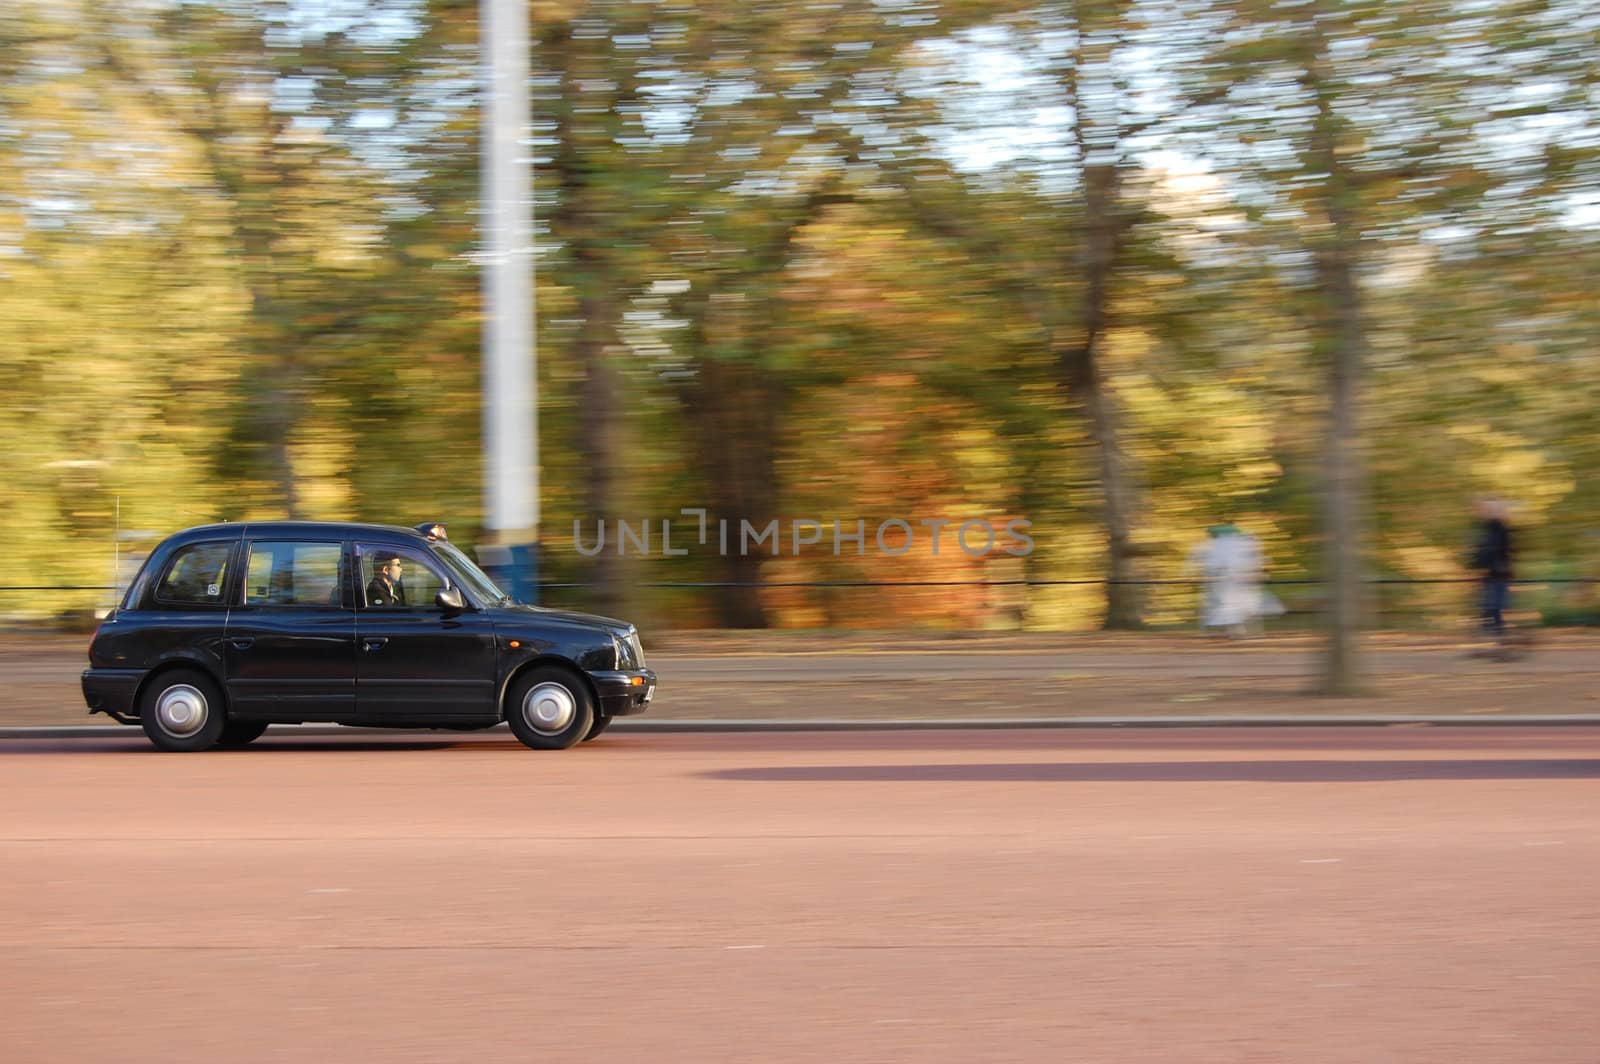 London black cab by unikpix